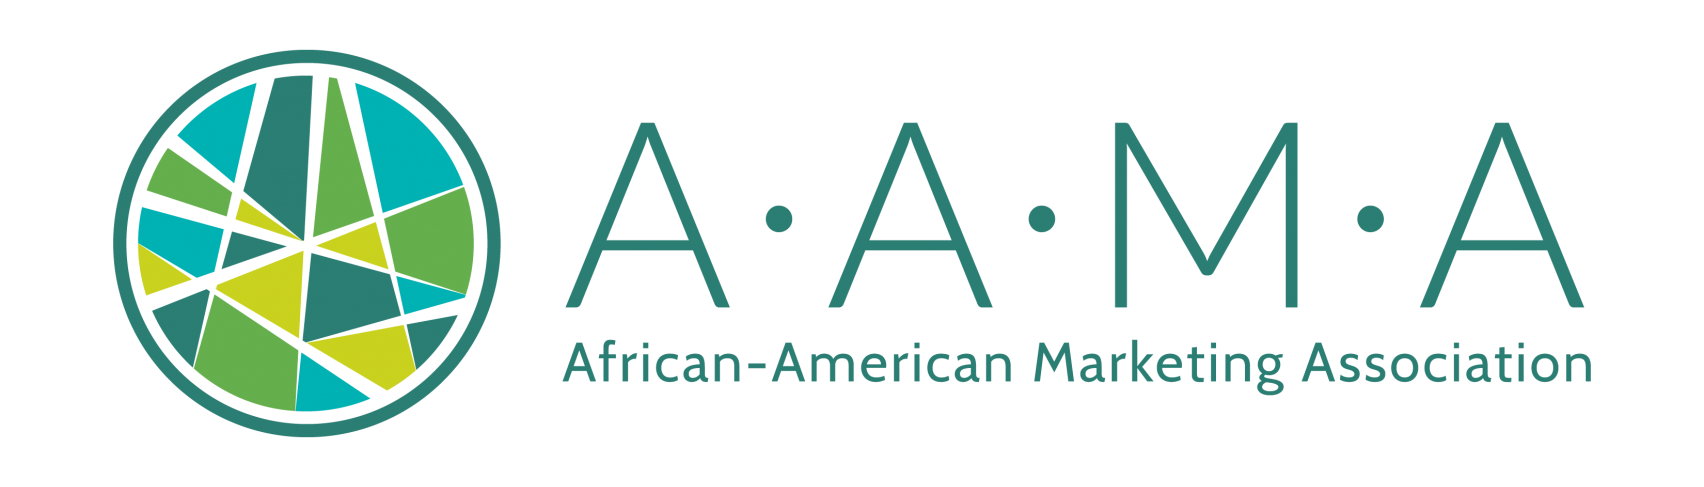 African-American Marketing Association logo